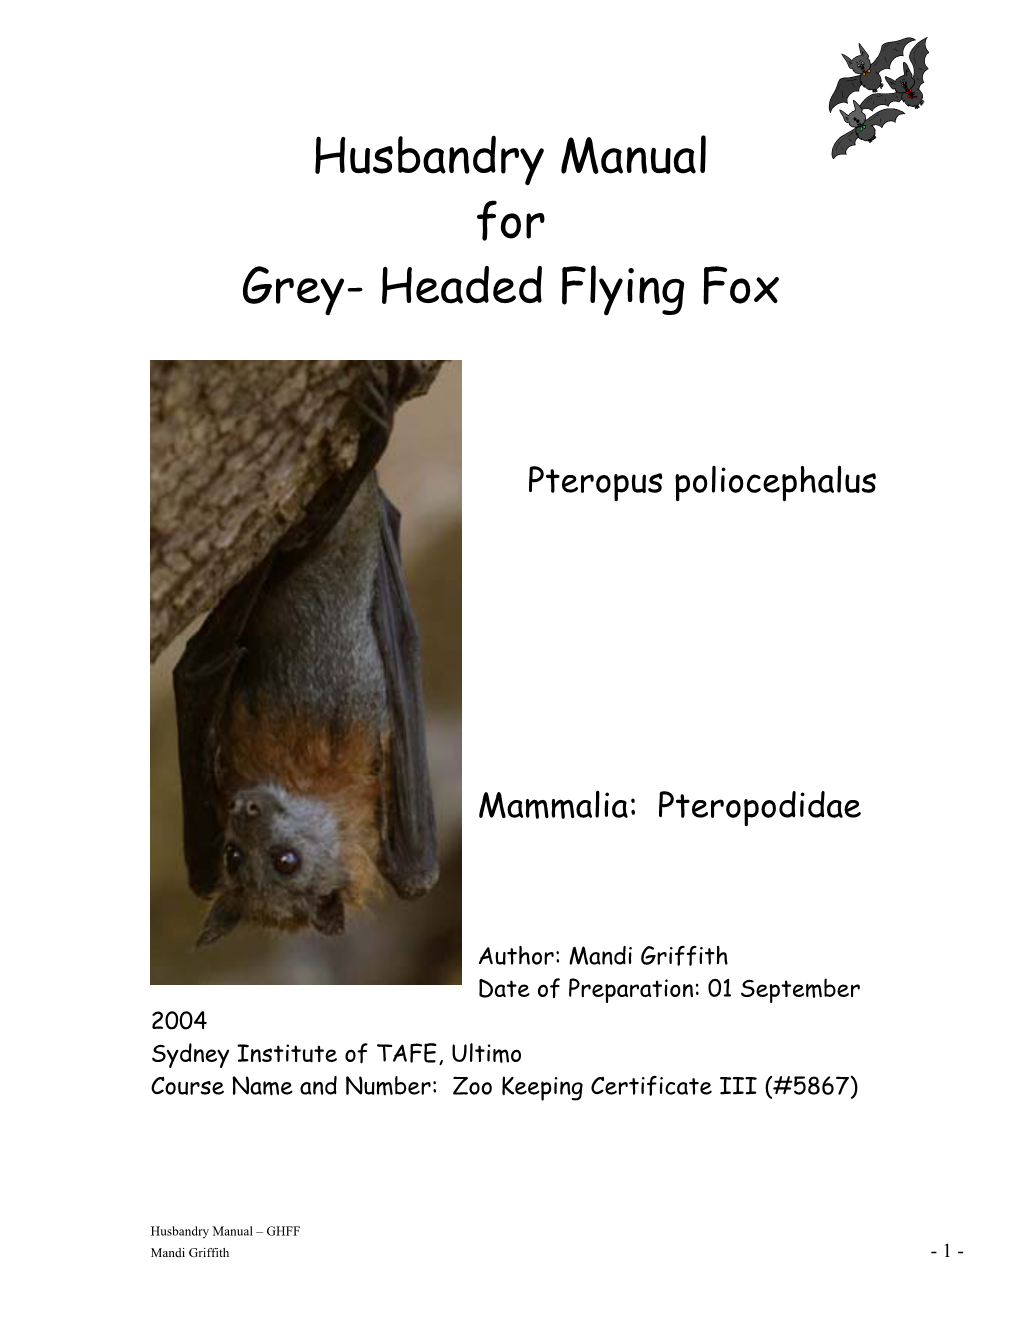 Husbandry Manual for Grey- Headed Flying Fox